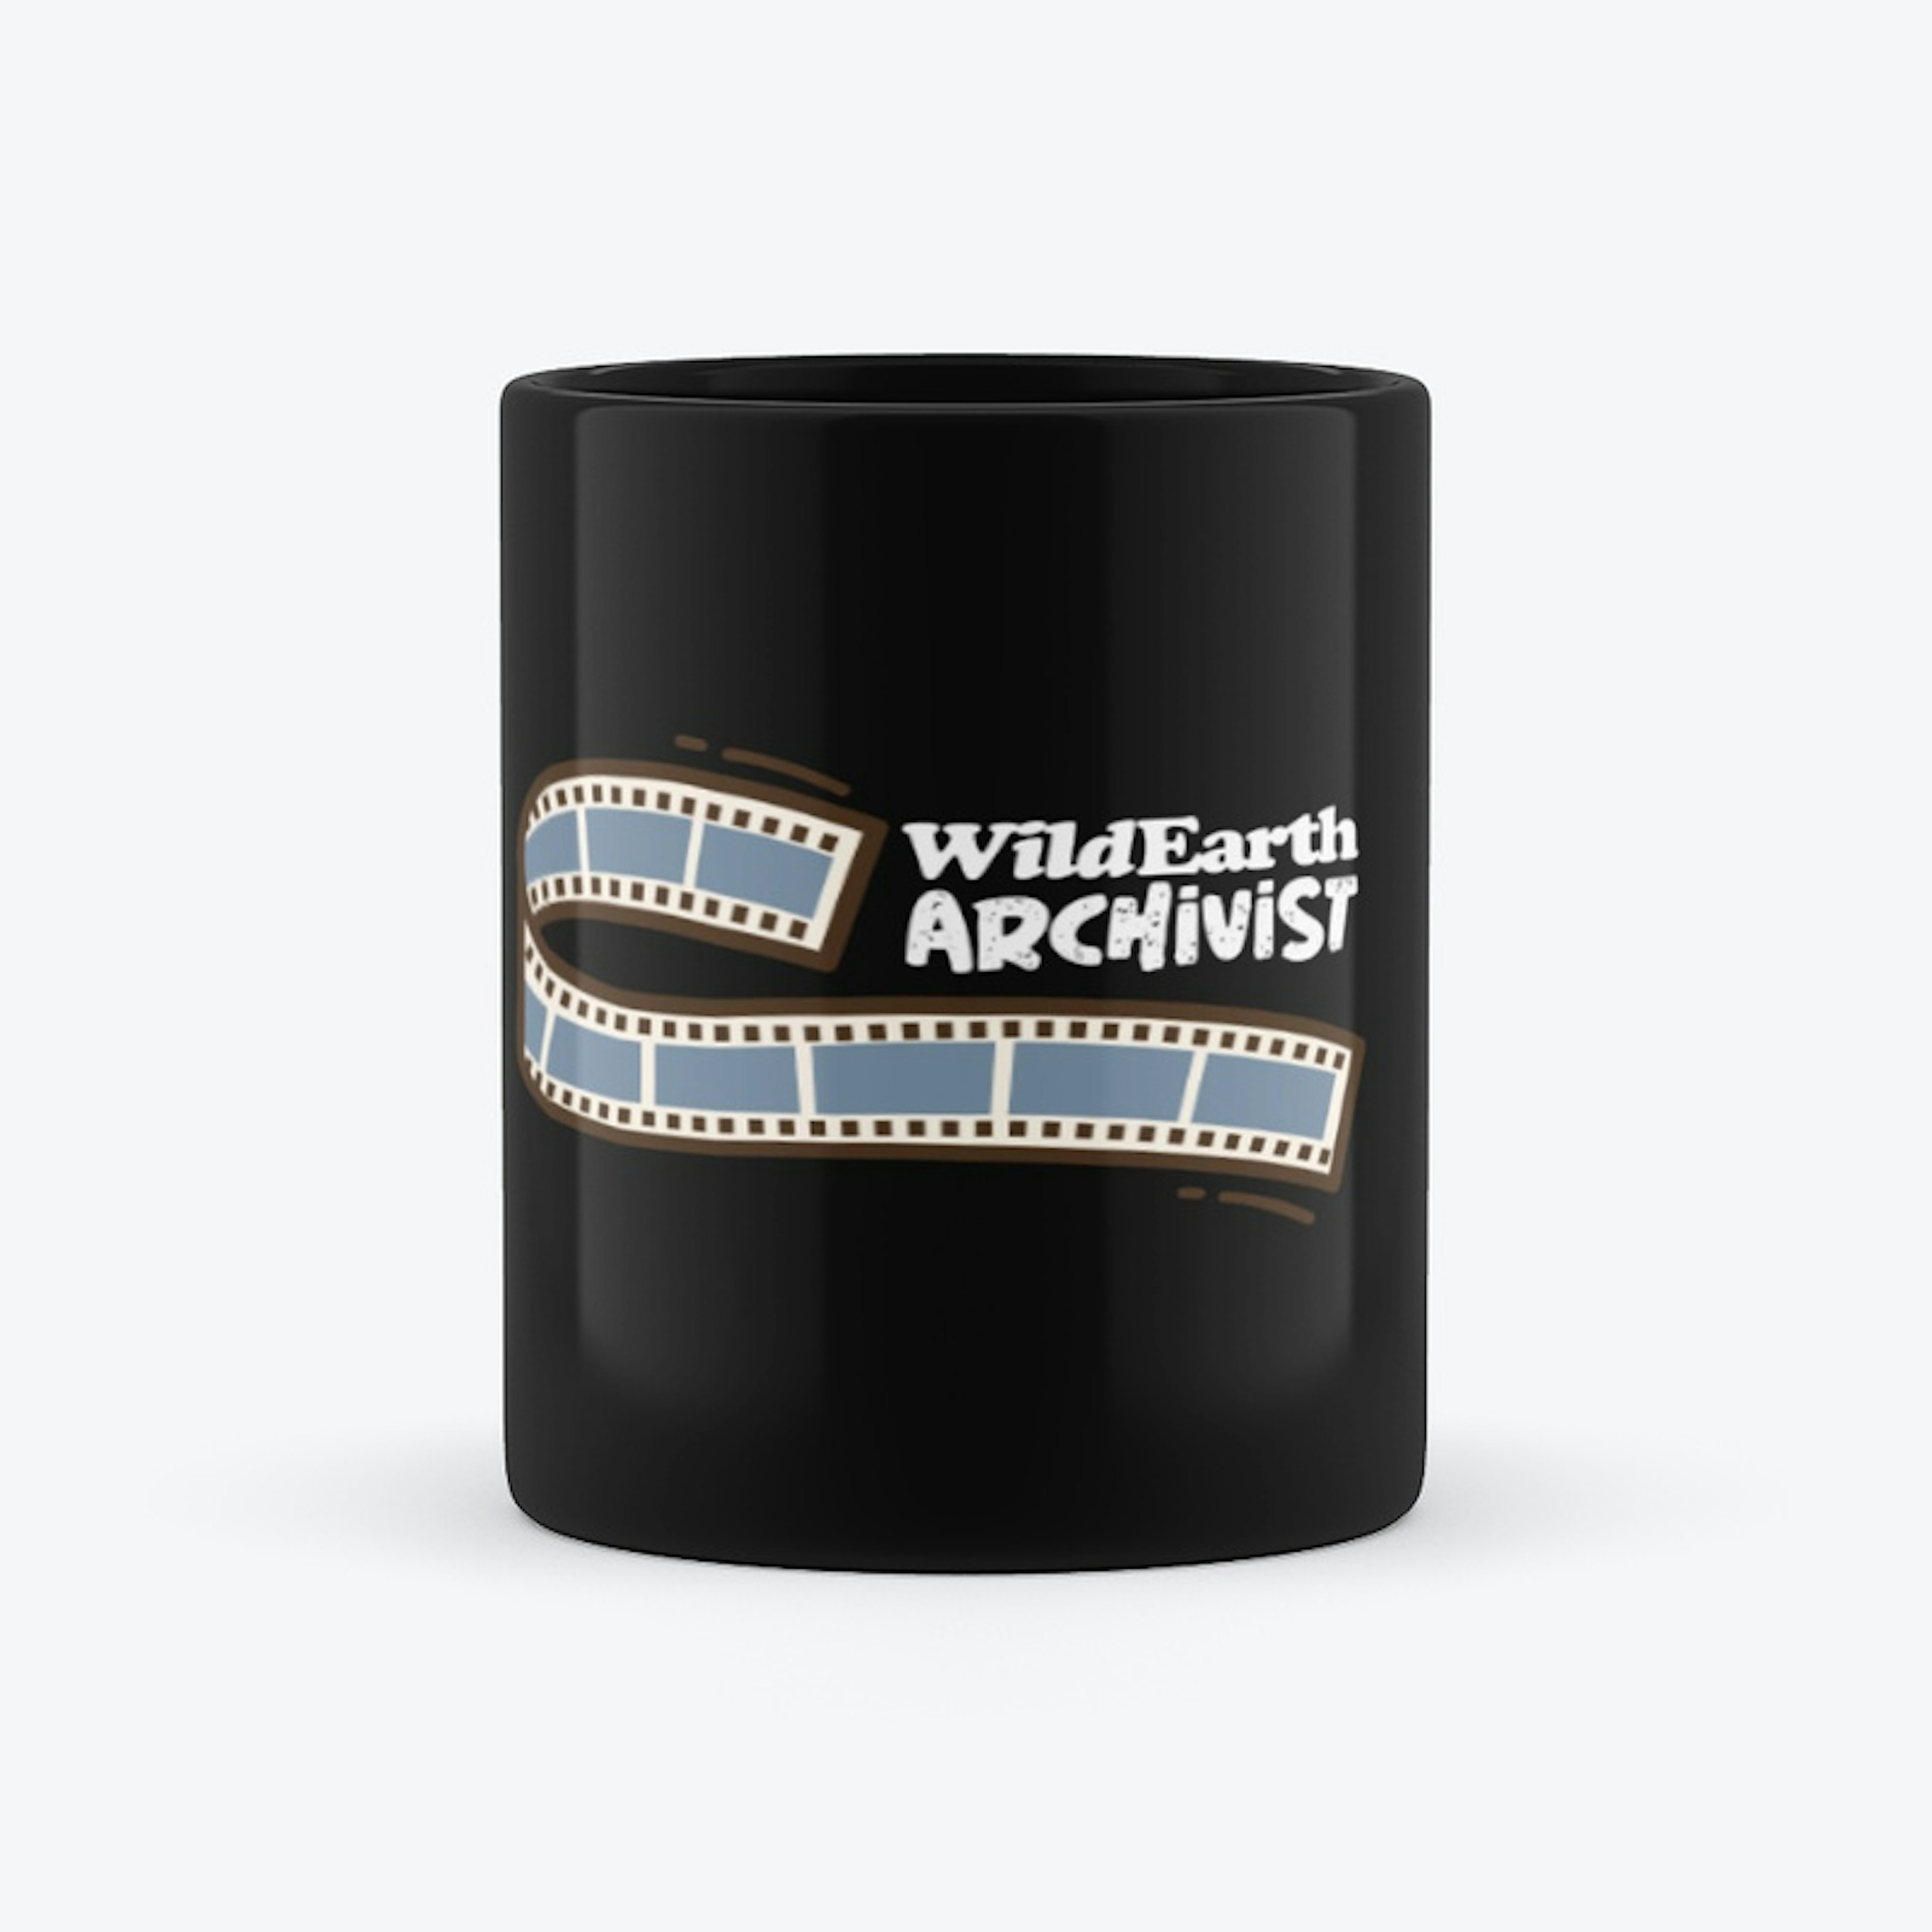 Archivist filmstrip mug